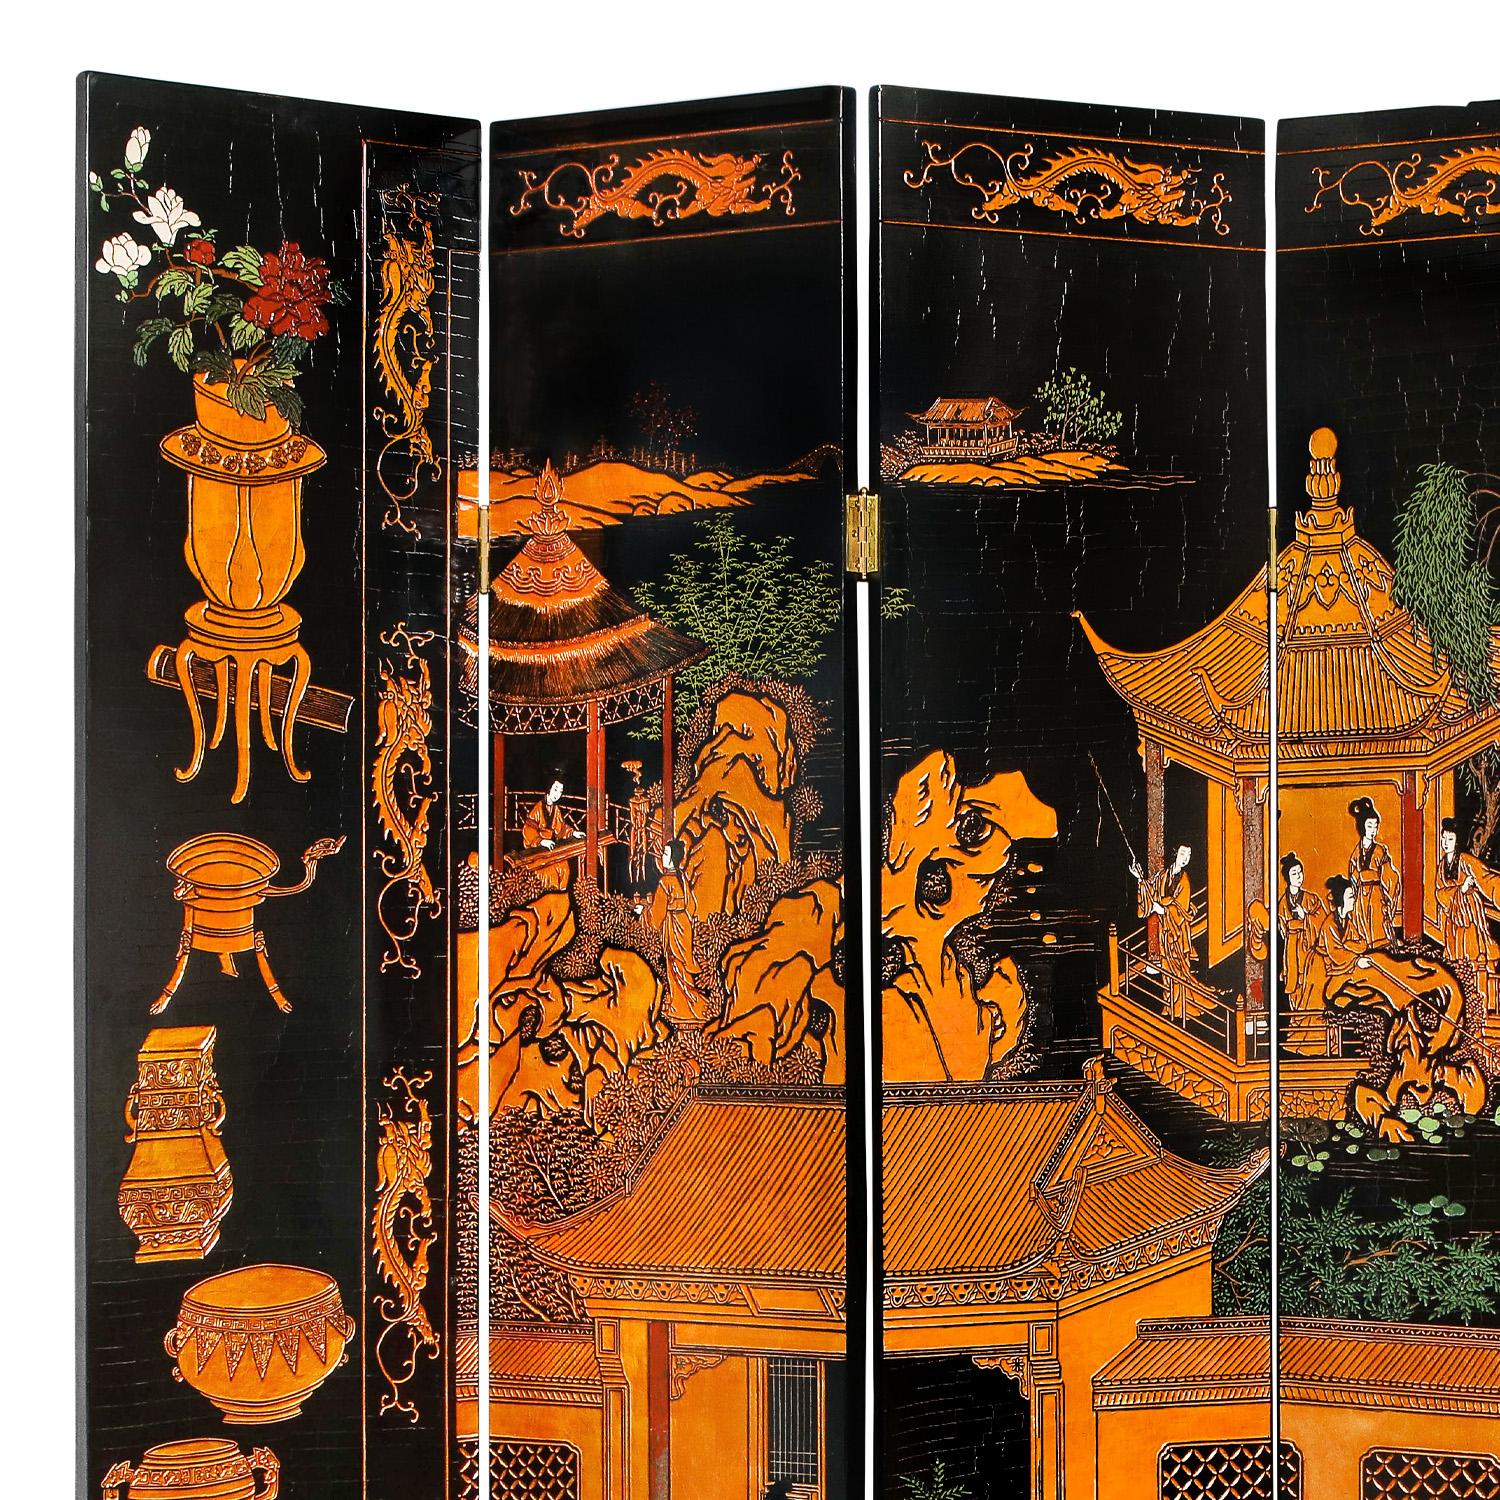 American Pair of Superb 6 Panel Chinese Screens Sold through Karl Springer, 1980s